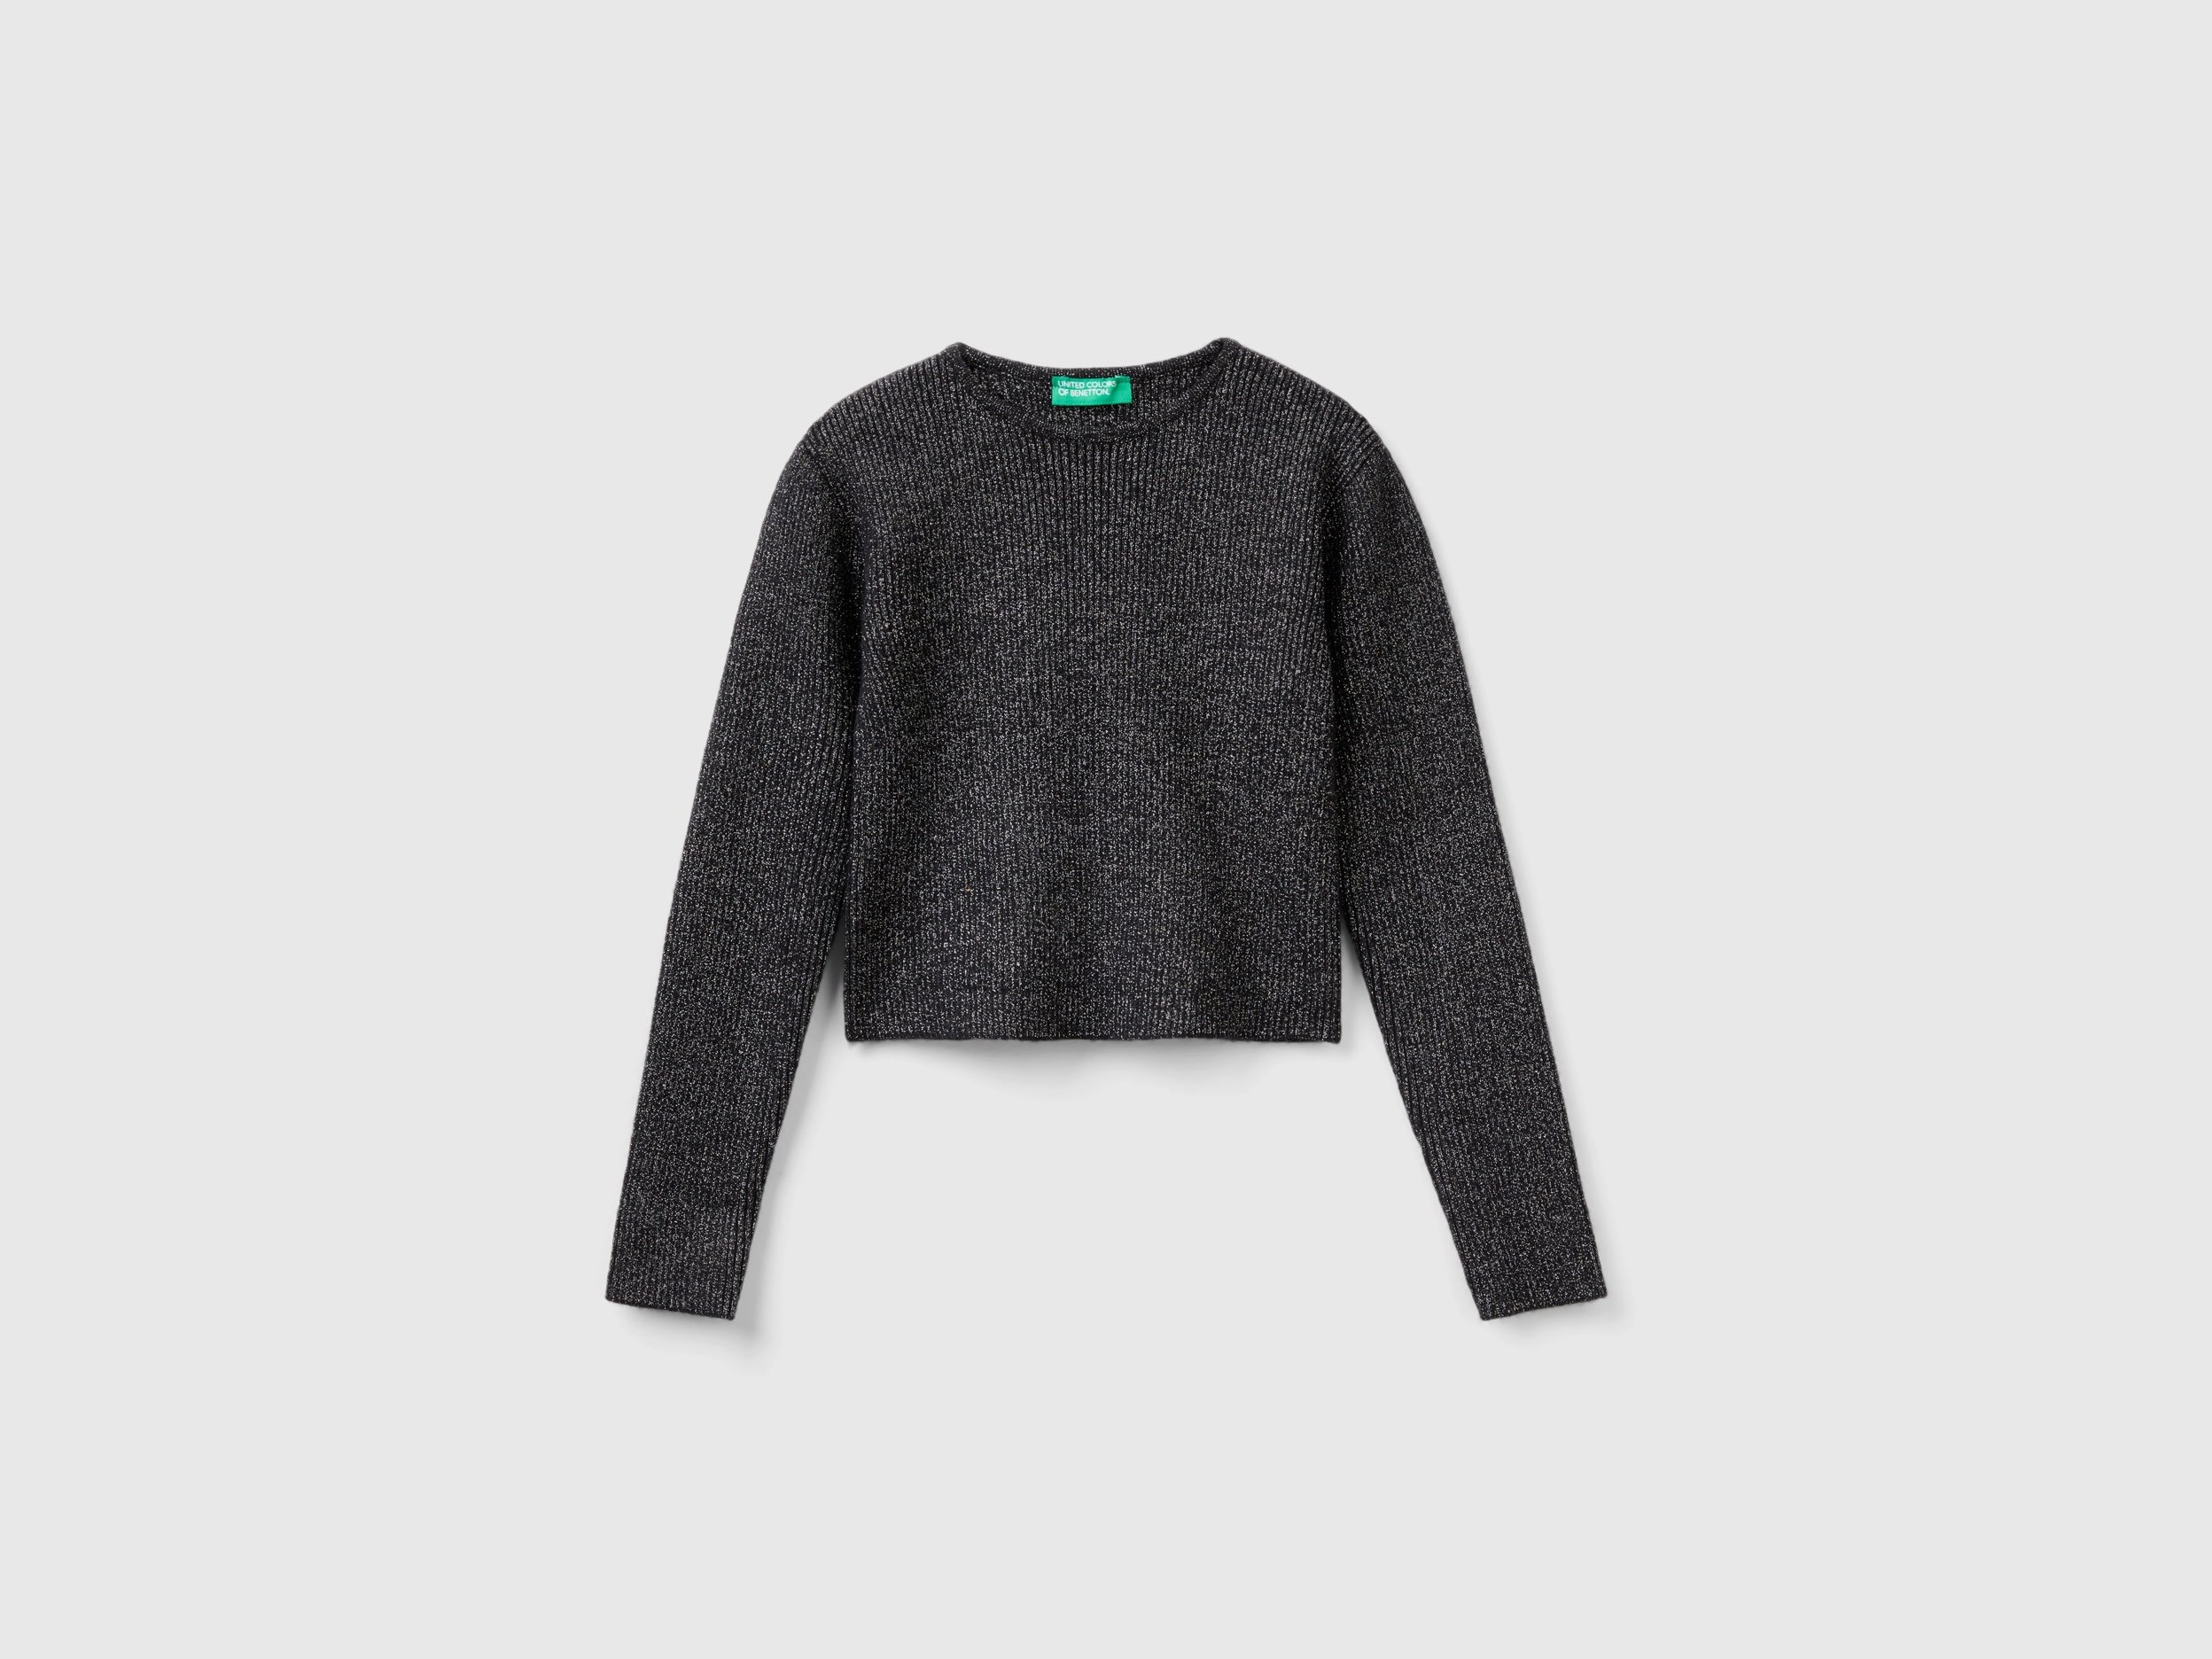 Benetton, Sweater With Lurex, size L, Black, Kids